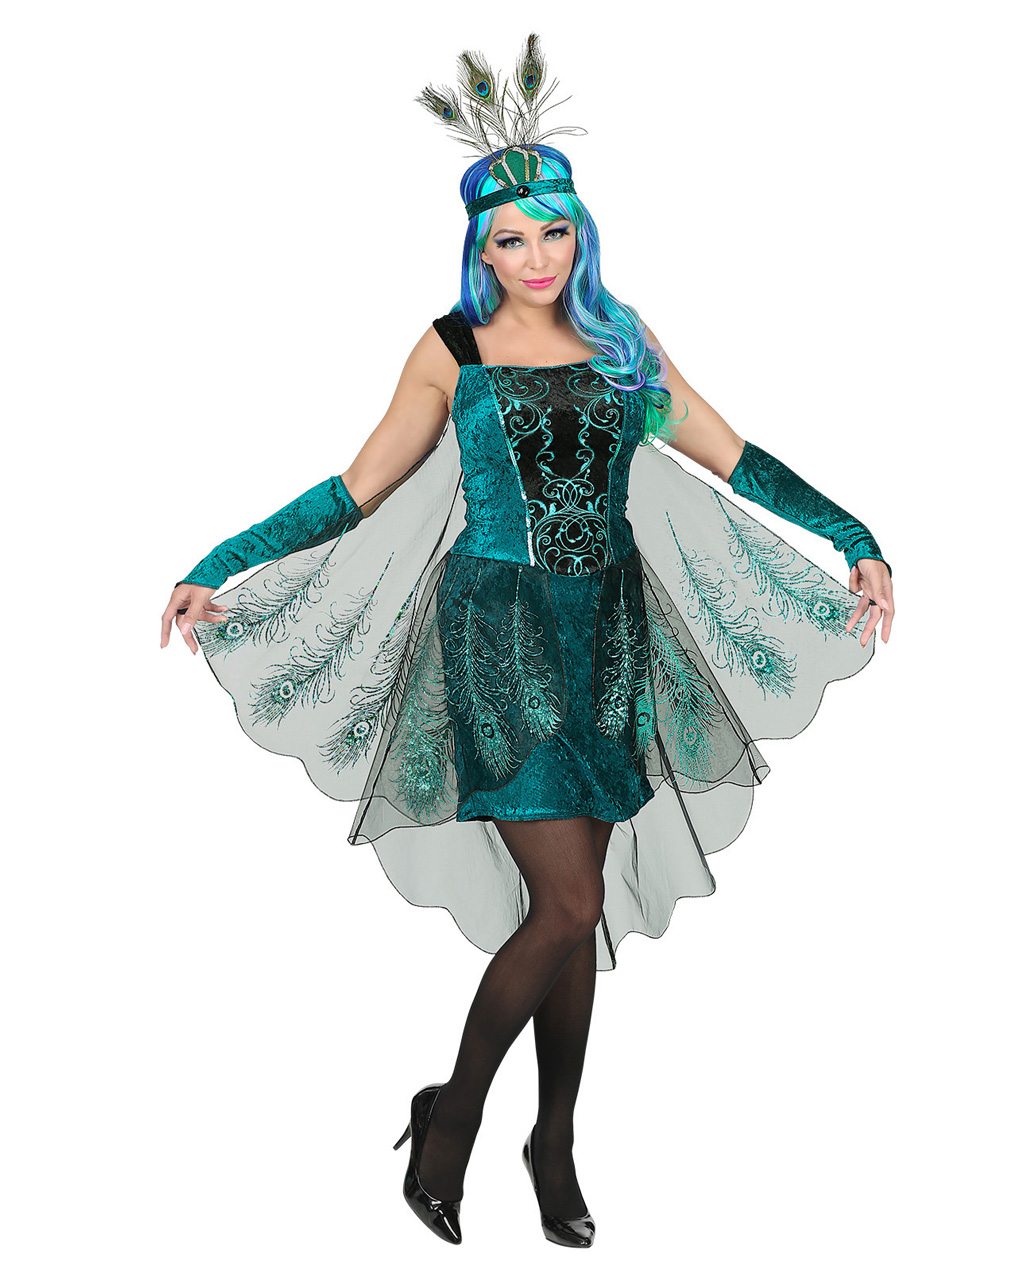 Peacock Fairy Costume With Headdress. fairy costume. 